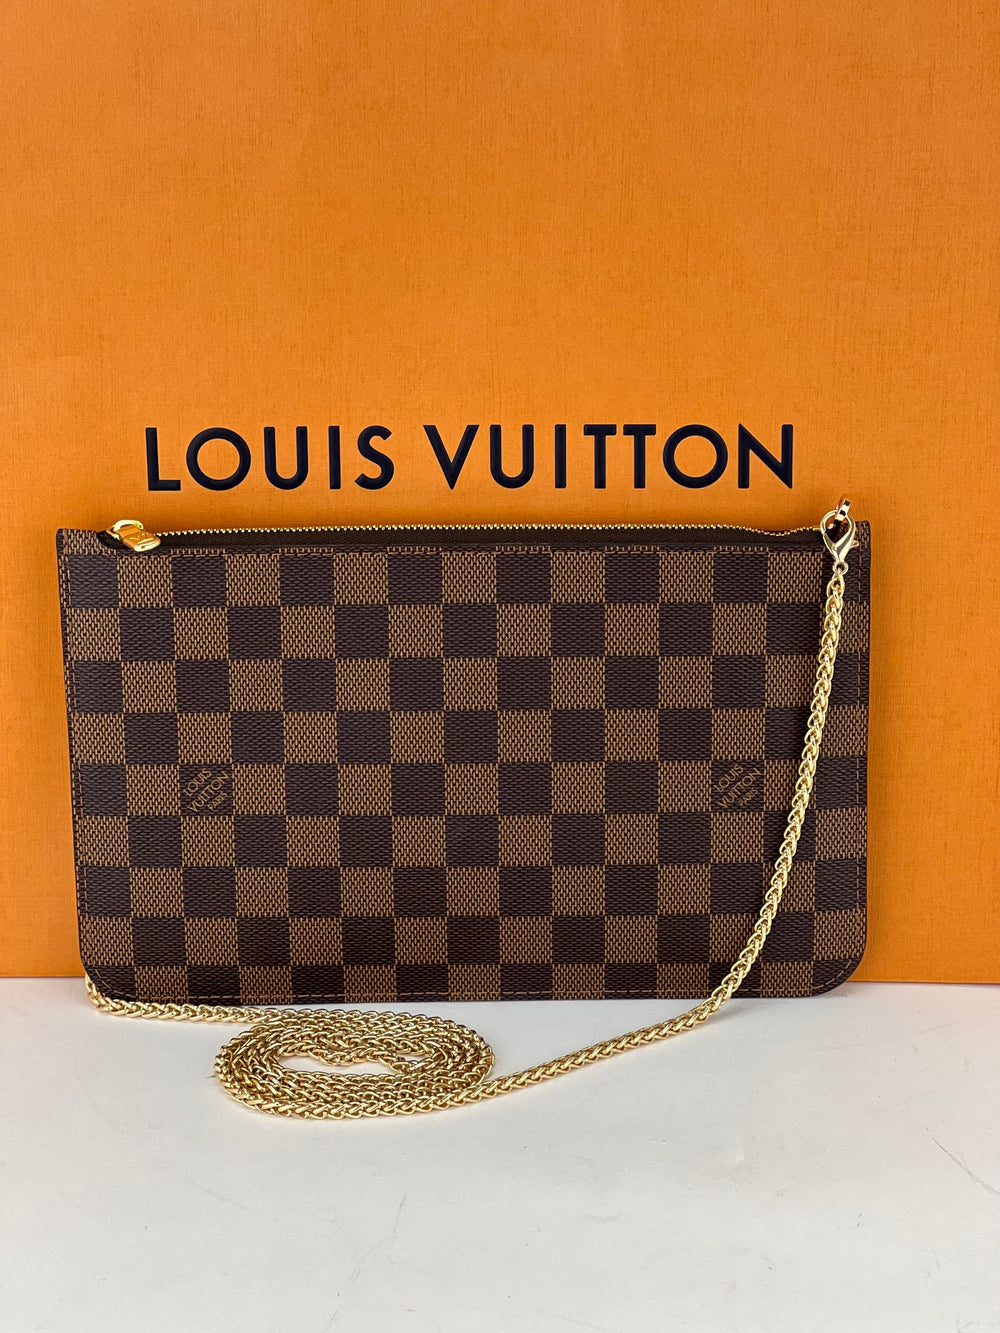 Louis Vuitton Neverfull MM clutch - Good or Bag